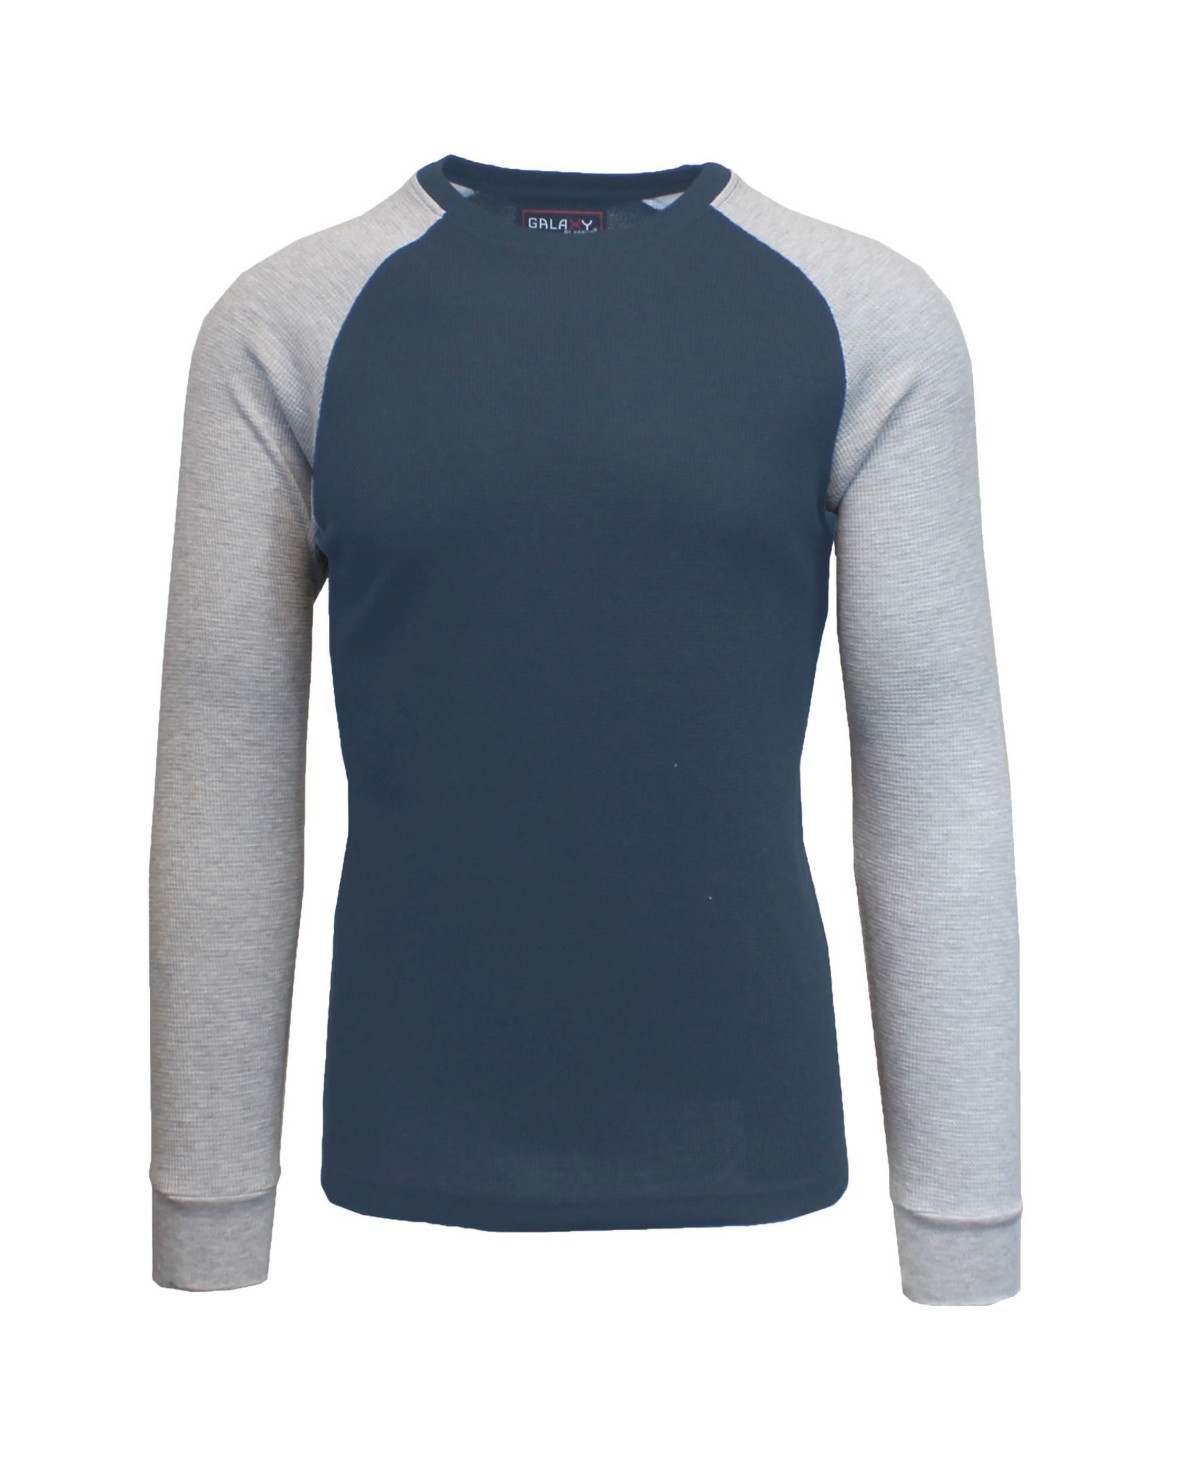 Men's Long Sleeve Thermal Shirt with Contrast Raglan Trim on Sleeves - Navy-heath